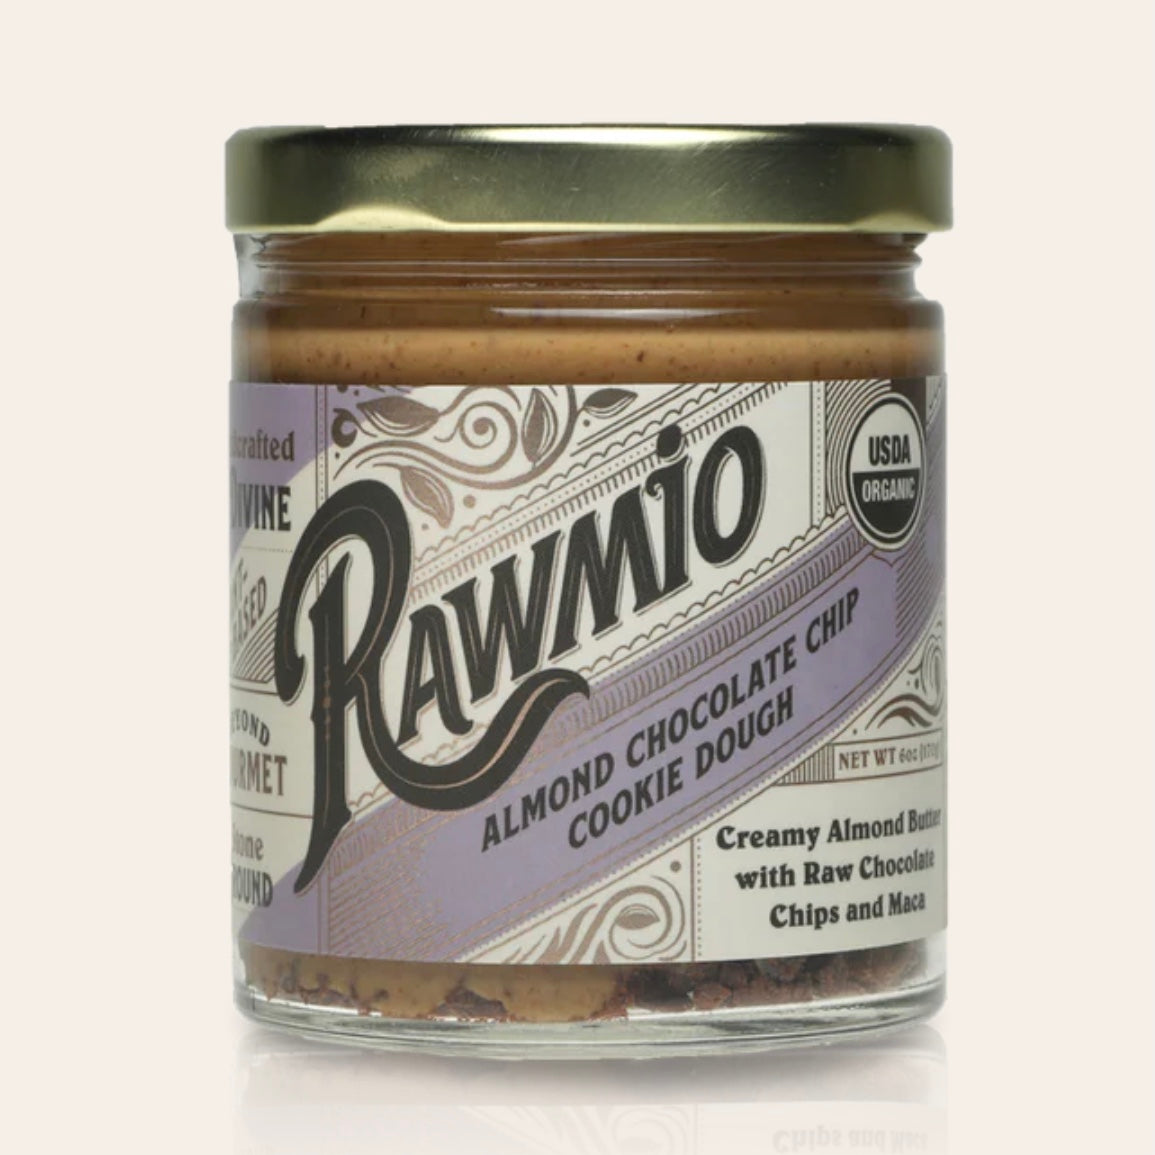 Rawmio Almond Chocolate Chip Cookie Dough Spread